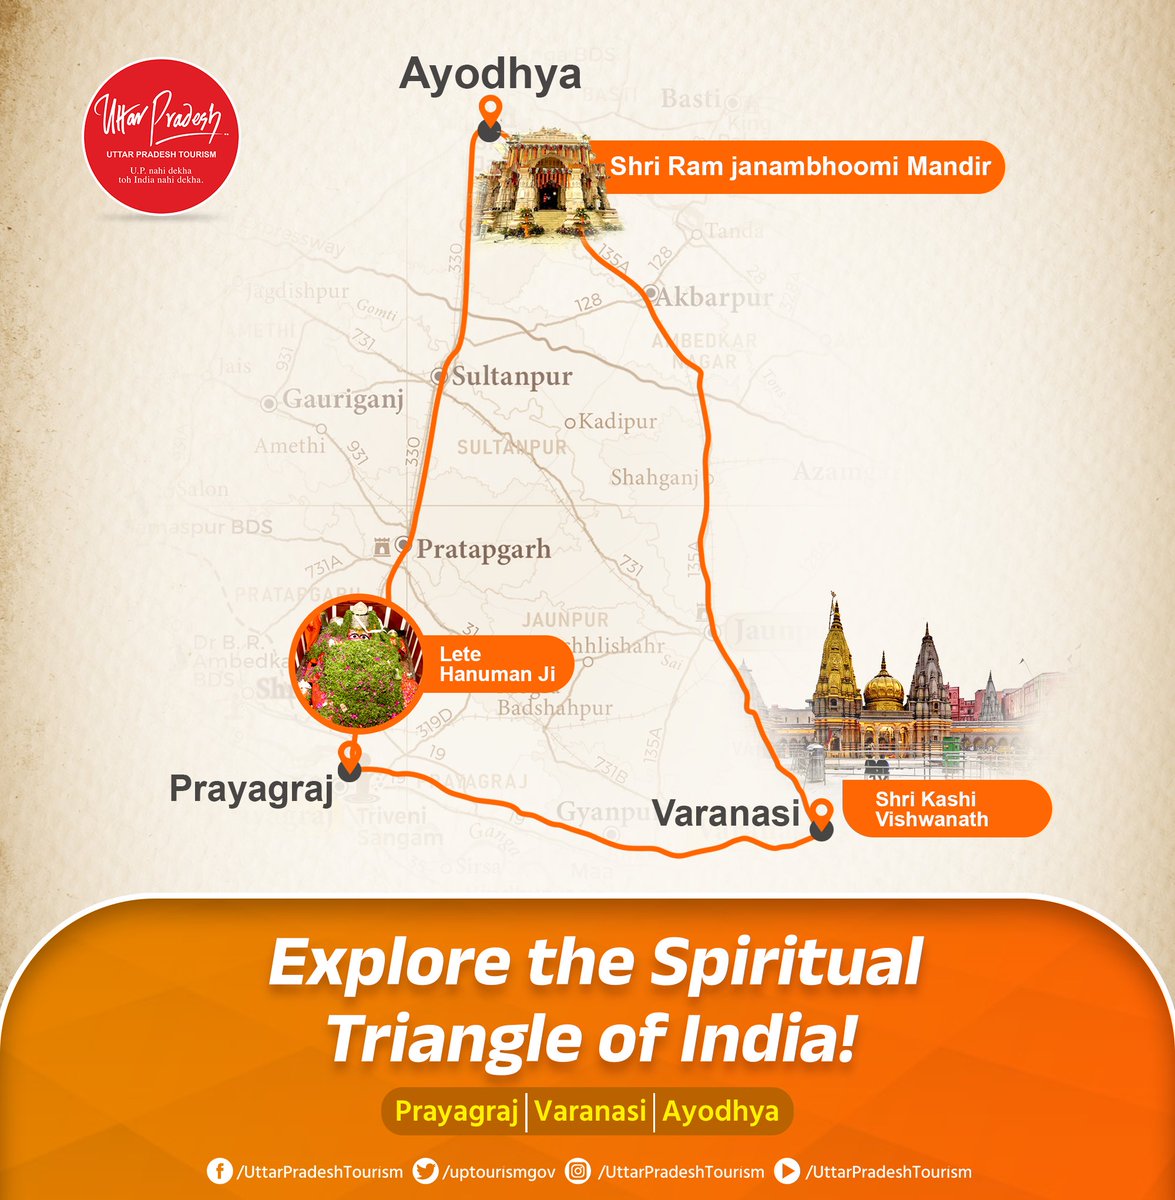 Feel the spiritual rhythm of India's trio: #Prayagraj, #Varanasi, & #Ayodhya. These ancient hubs brim with devotion, offering an unforgettable pilgrimage. Immerse in India's soul! #UPTourism #UttarPradesh #SpiritualTourism #ReligiousTourism @MukeshMeshram